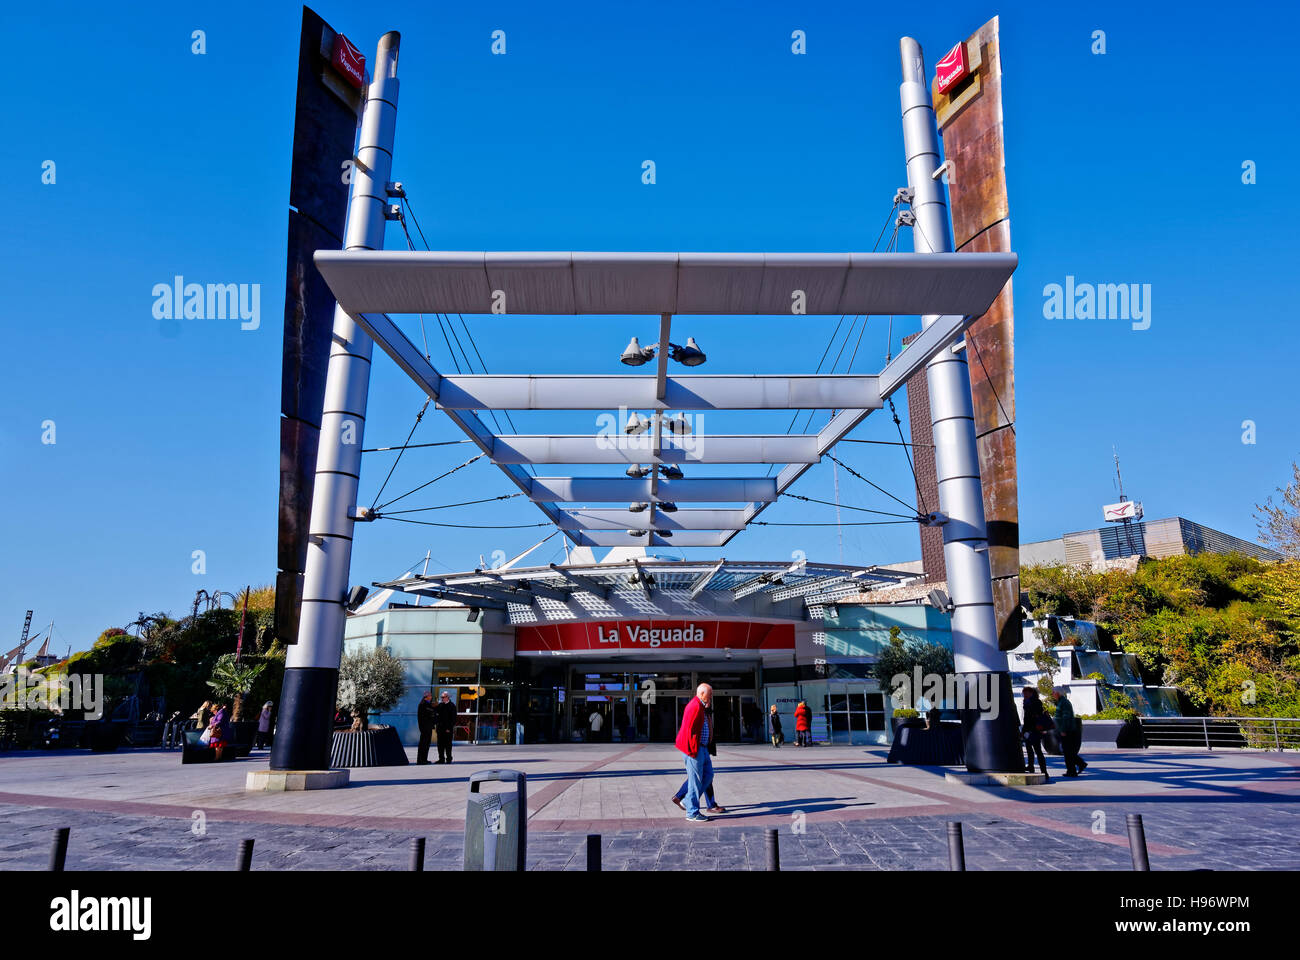 Madrid shopping mall fotografías e imágenes de alta resolución - Página 2 -  Alamy